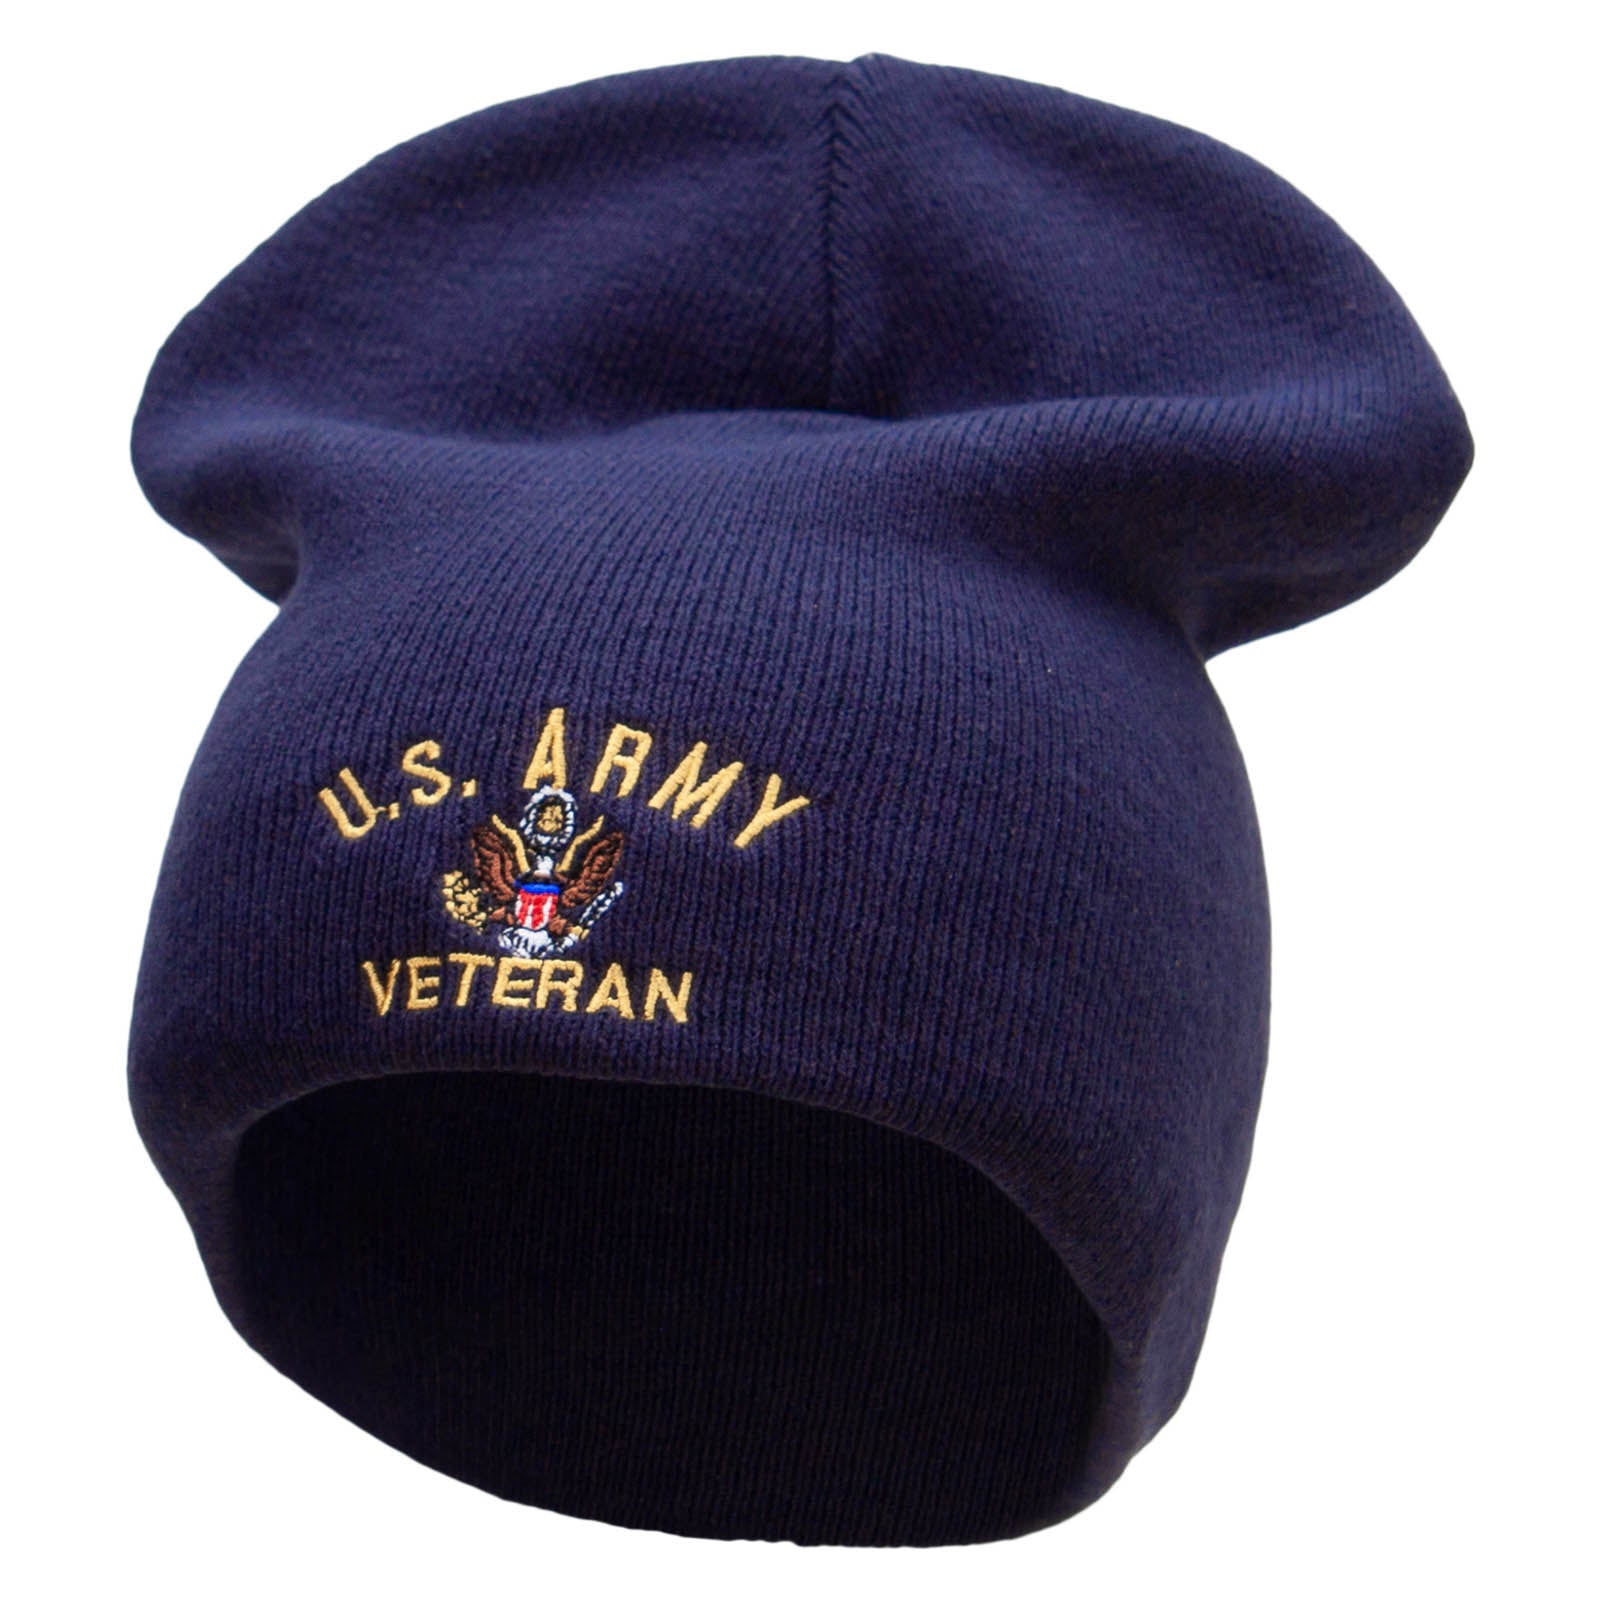 US Army Veteran Military Big Size Superior Cotton Short Knit Beanie - Navy XL-3XL